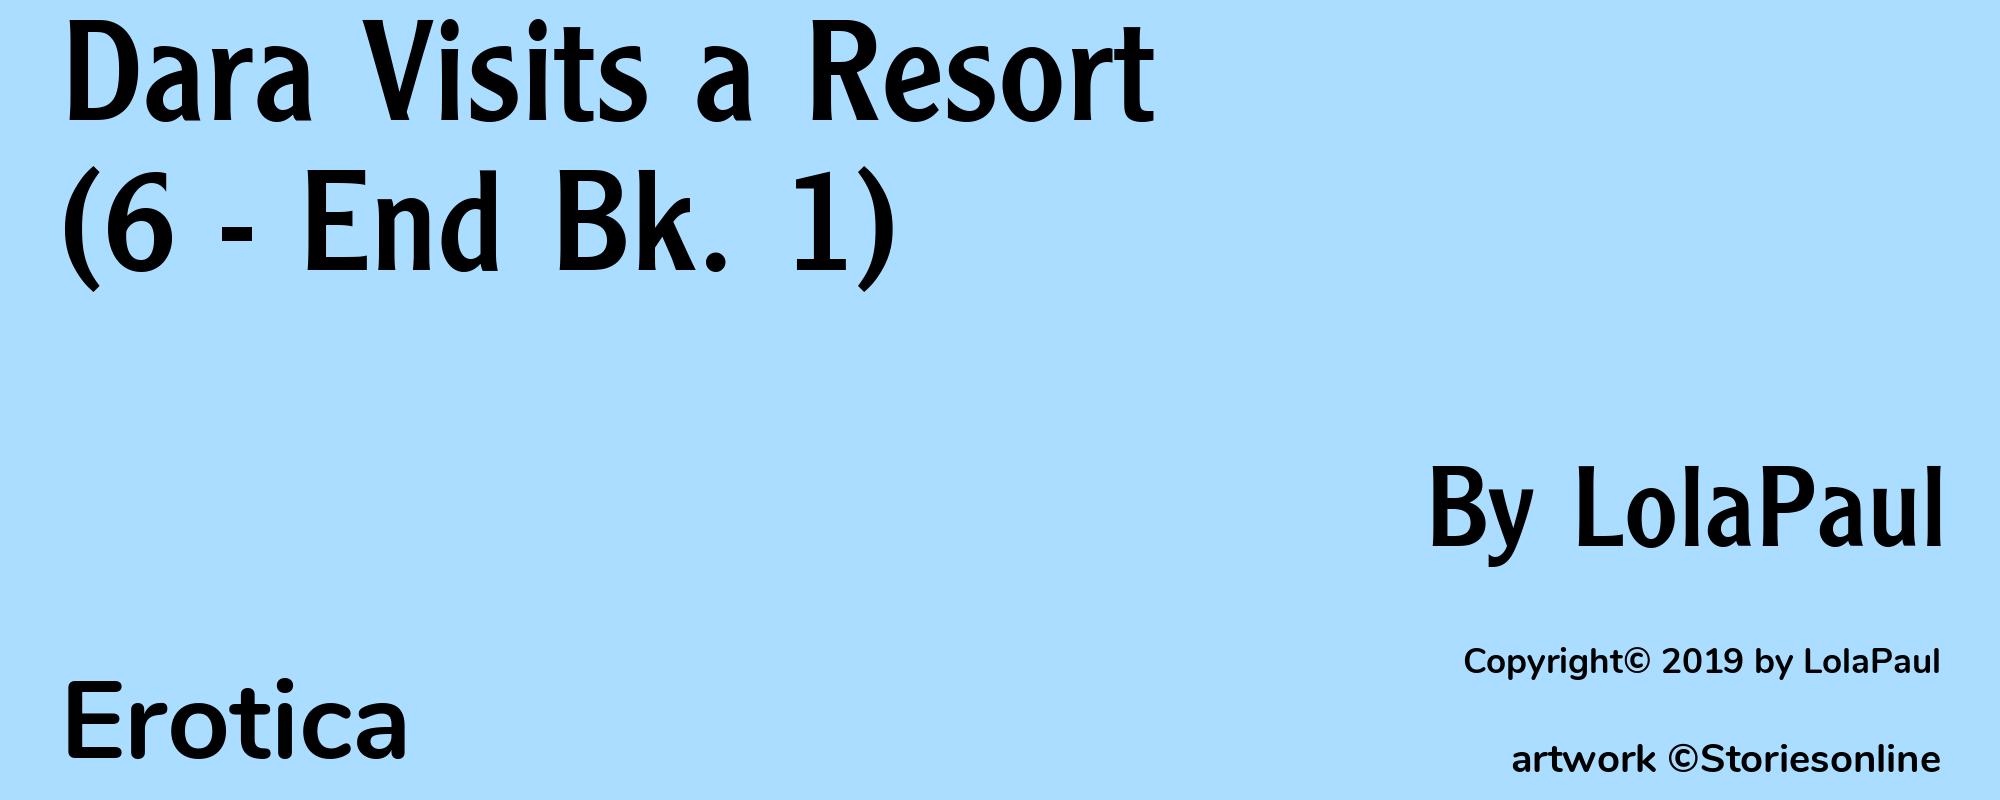 Dara Visits a Resort (6 - End Bk. 1) - Cover